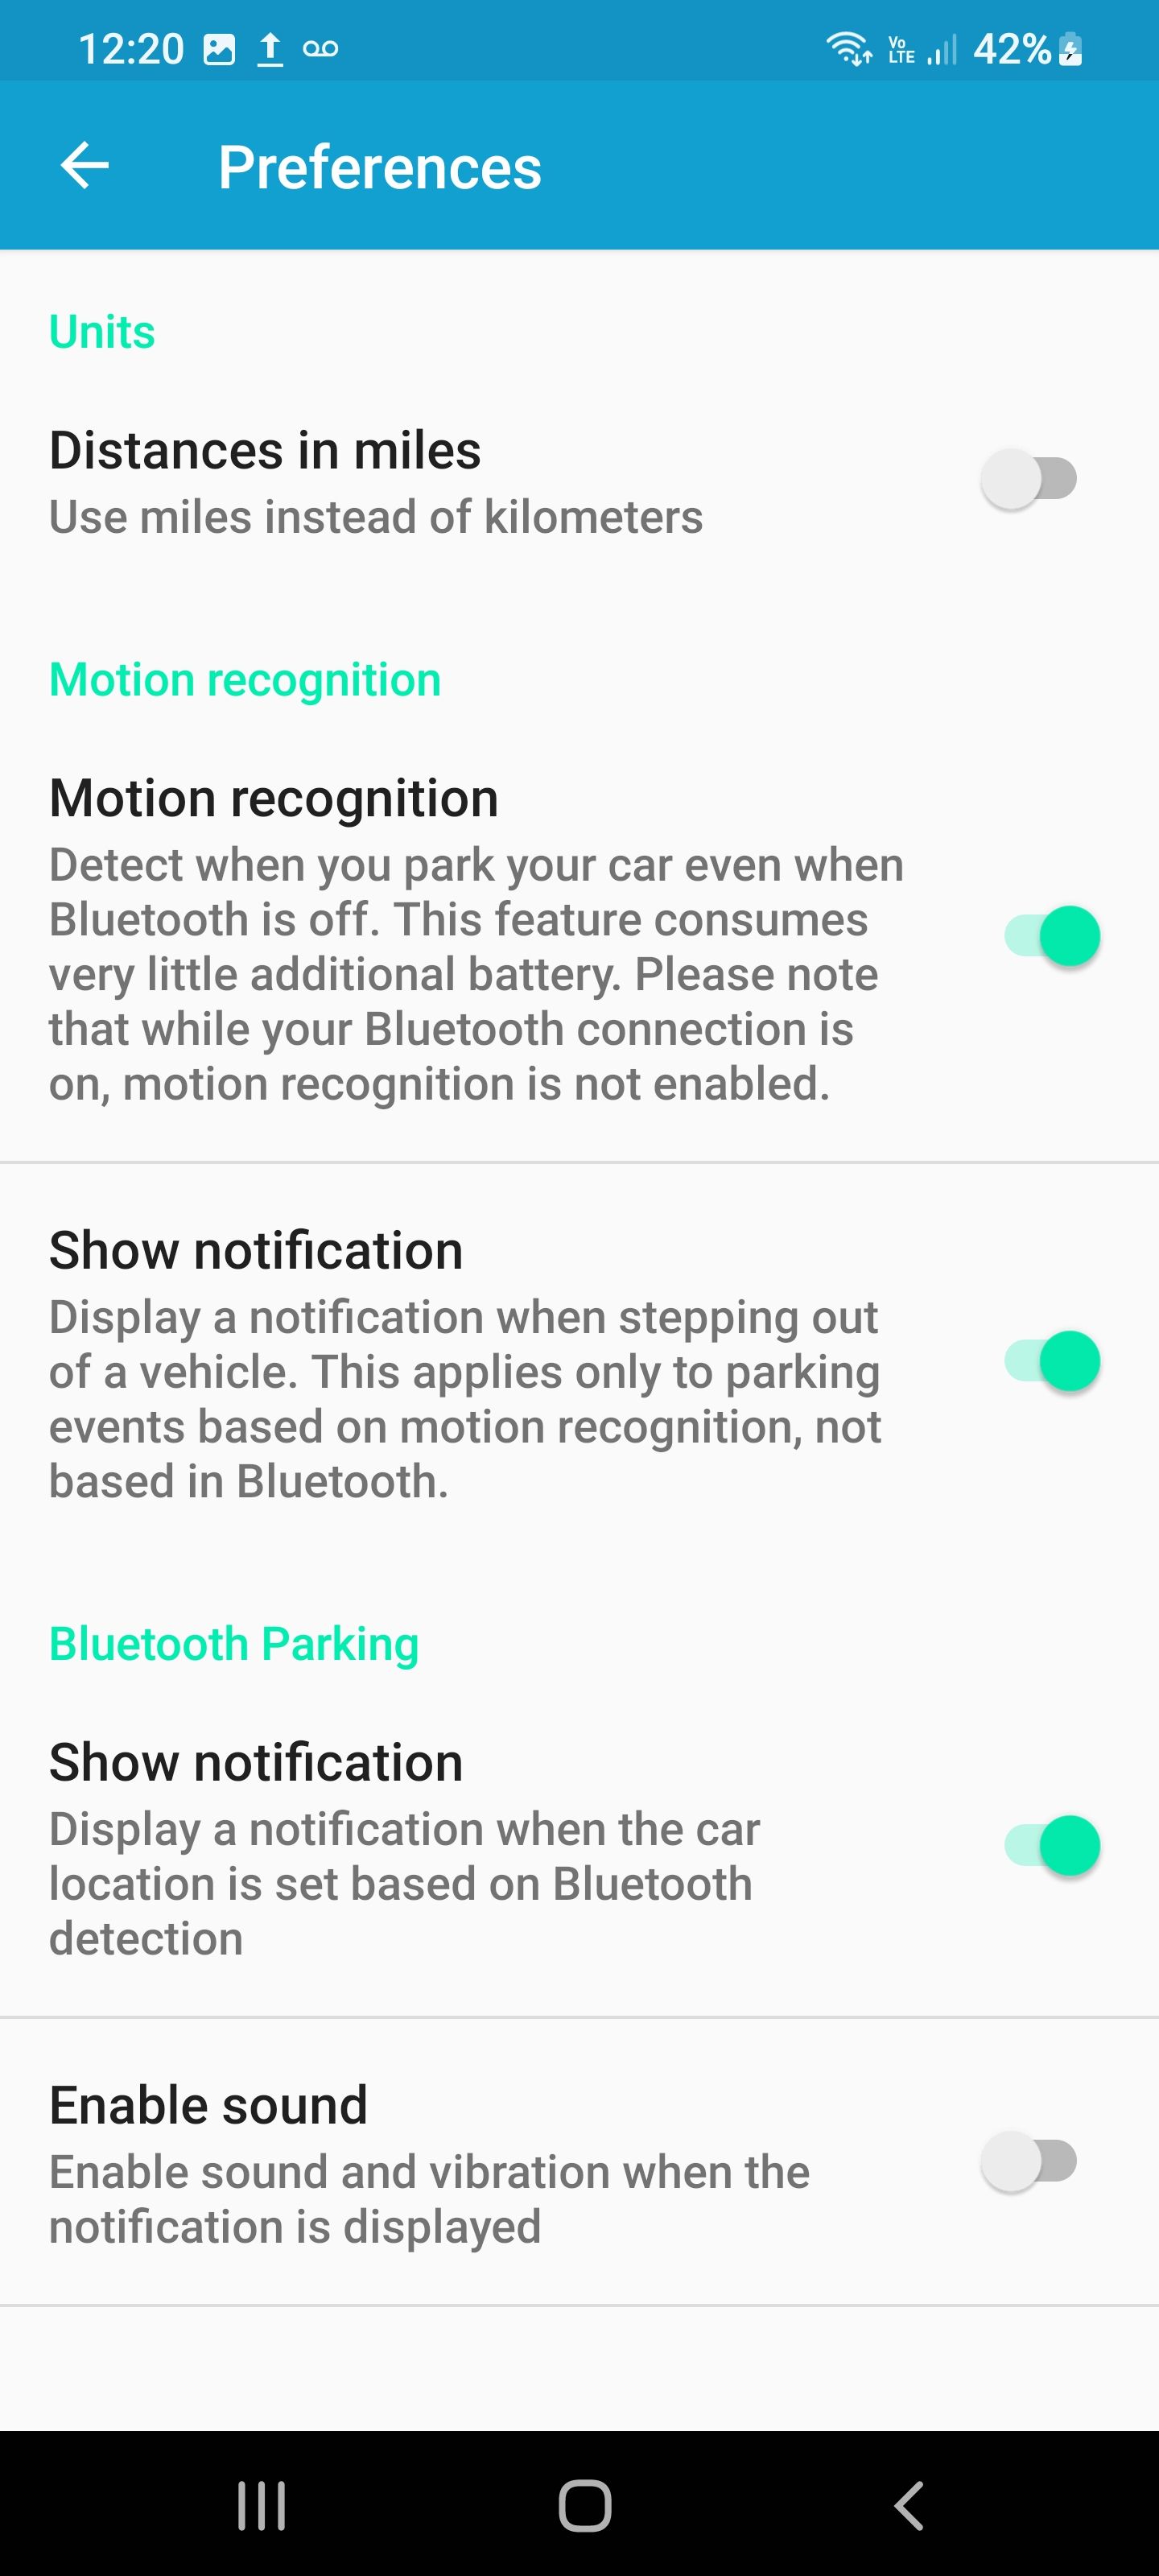 Preferences menu for Parkify app